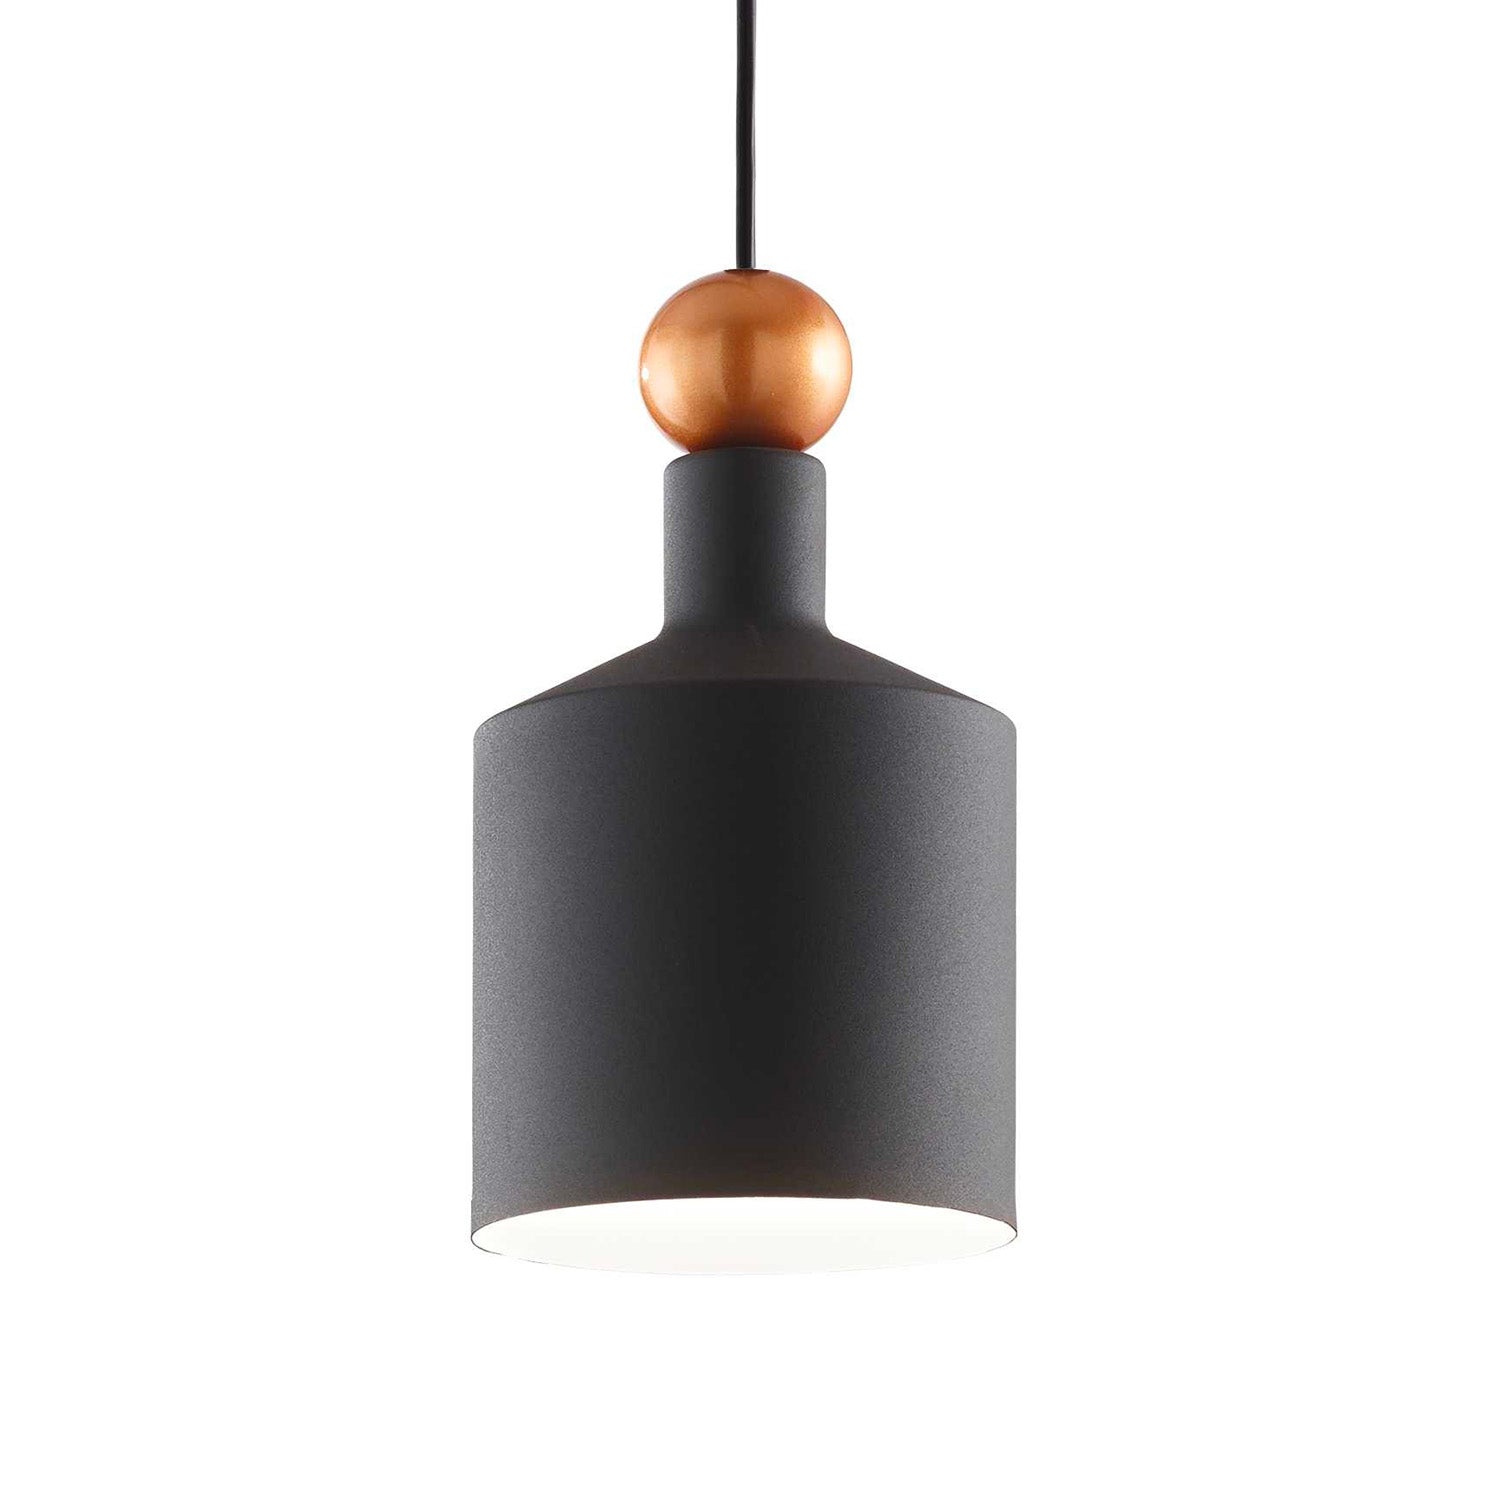 TRIADE 3 - Vintage black and bronze pendant light